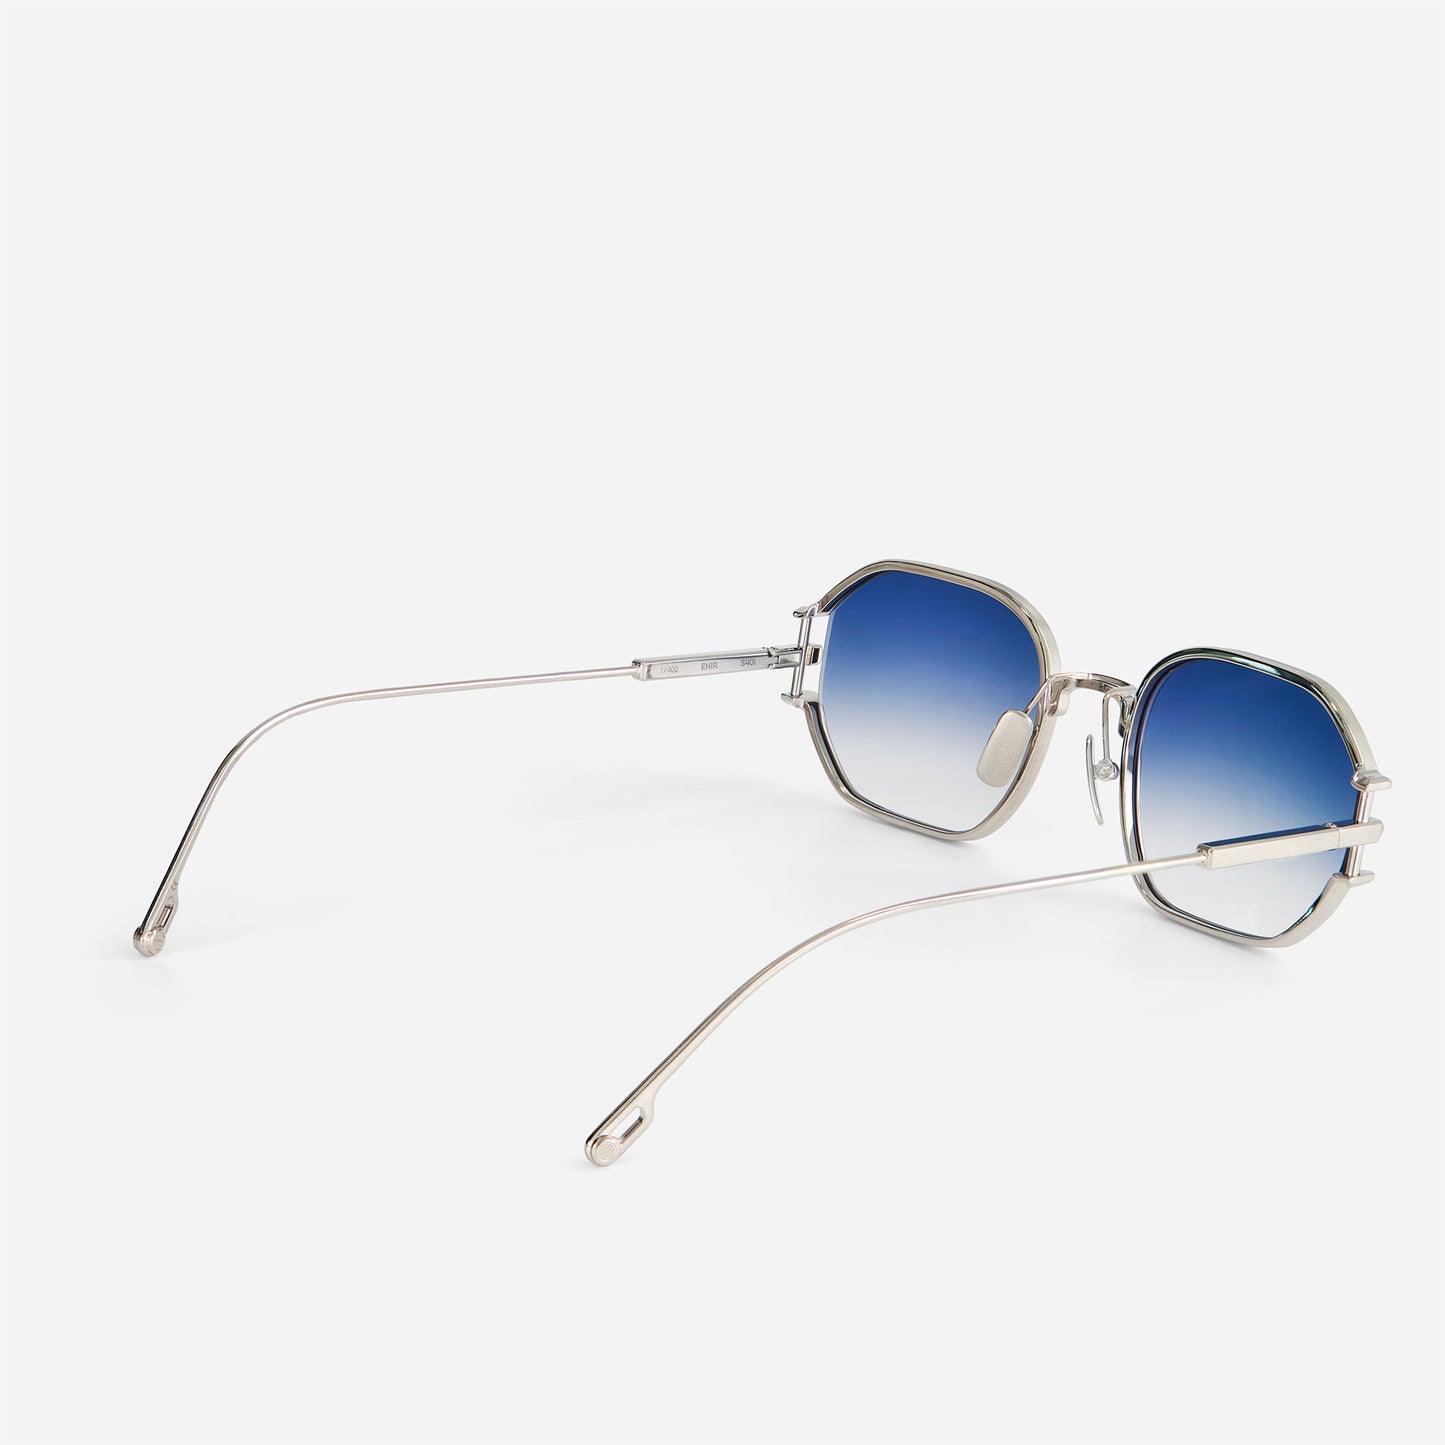 Sato collection I Enir S401 sunglasses